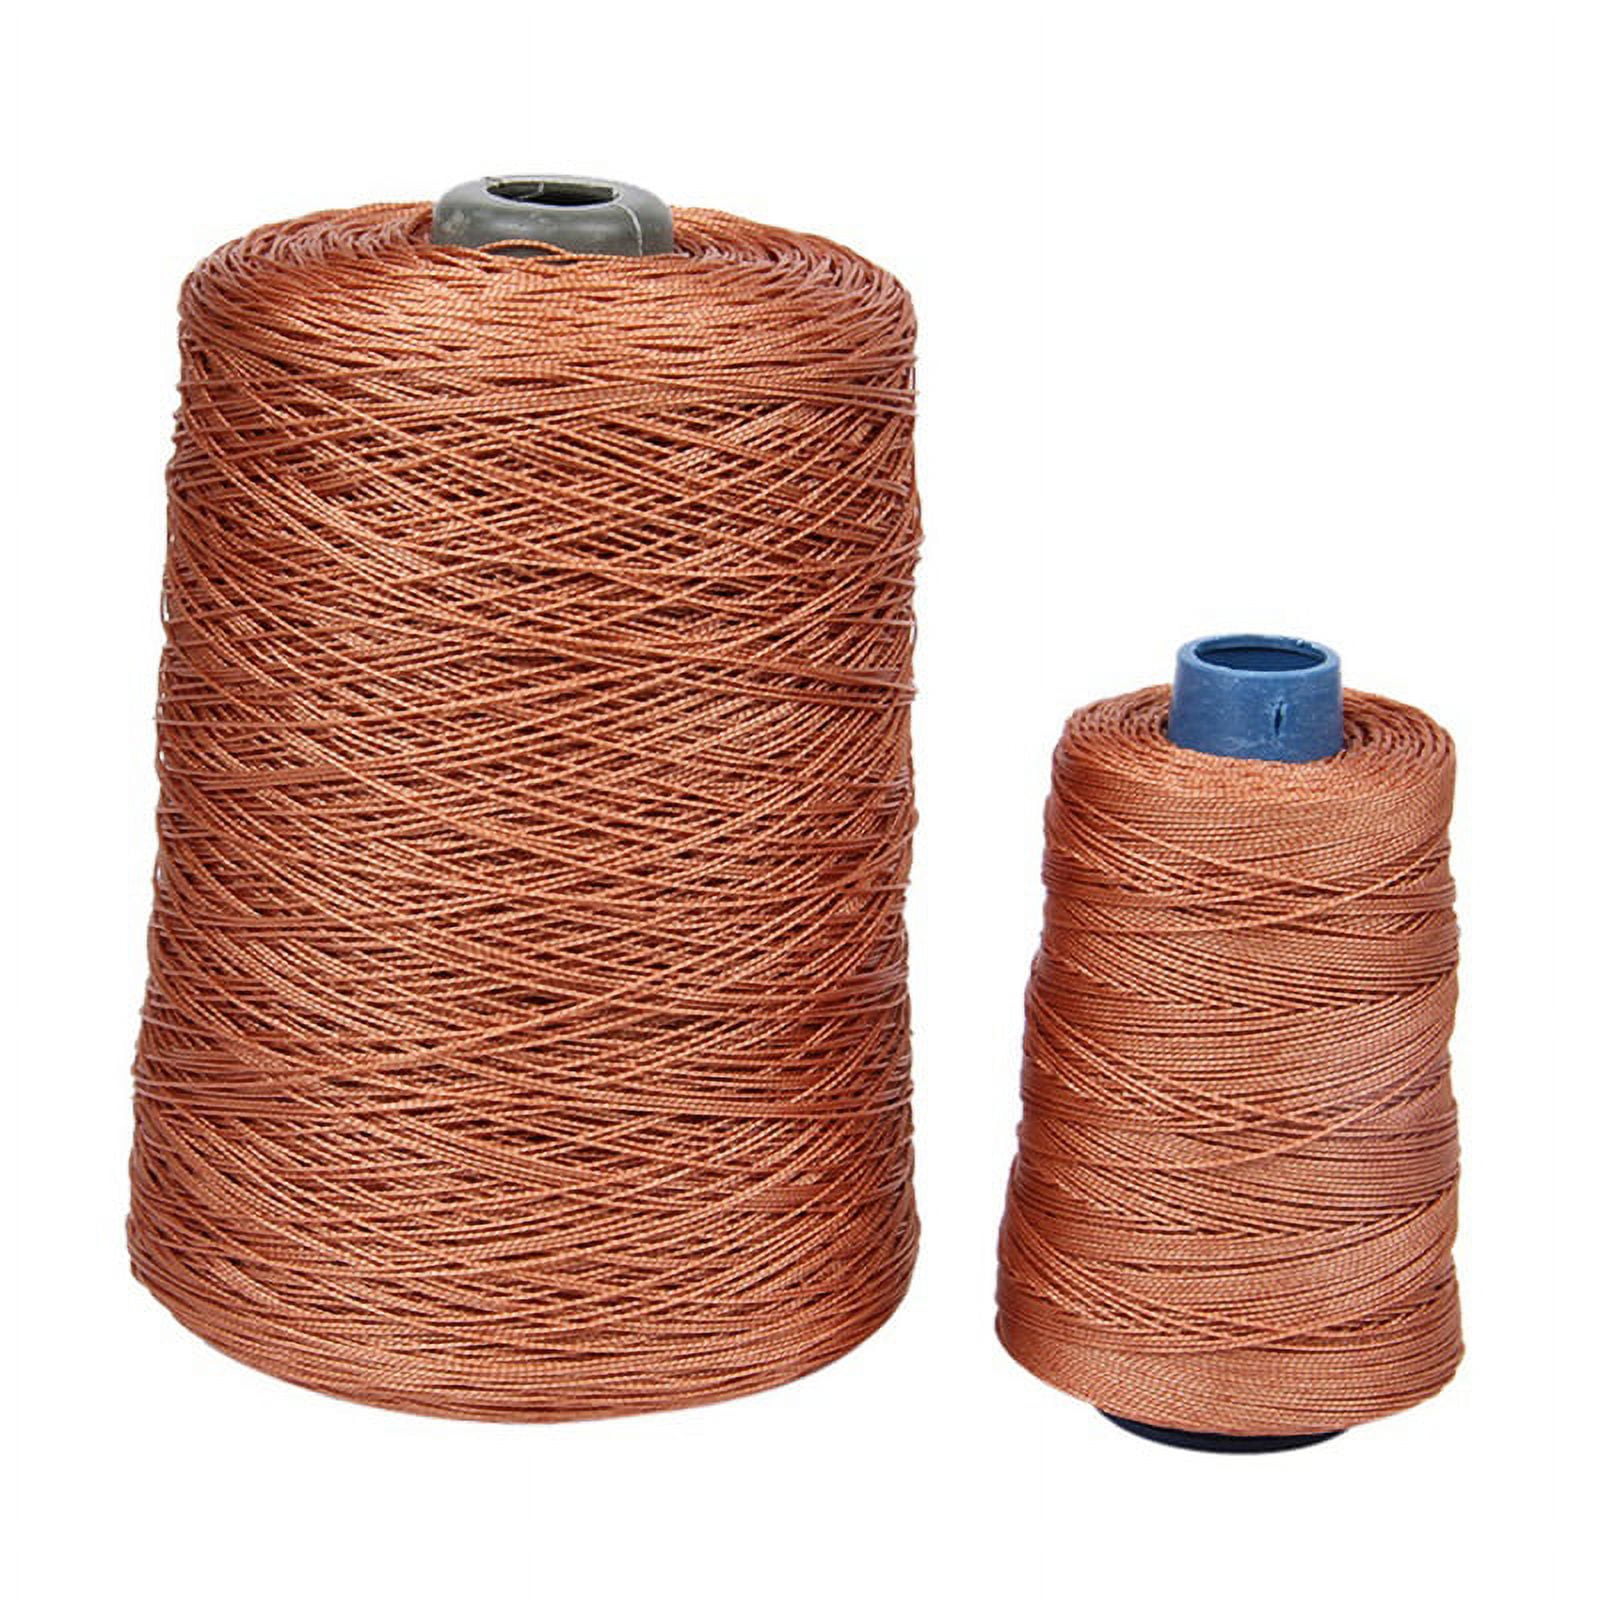  McFanBe Braided Nylon Twine Cord Thread String for